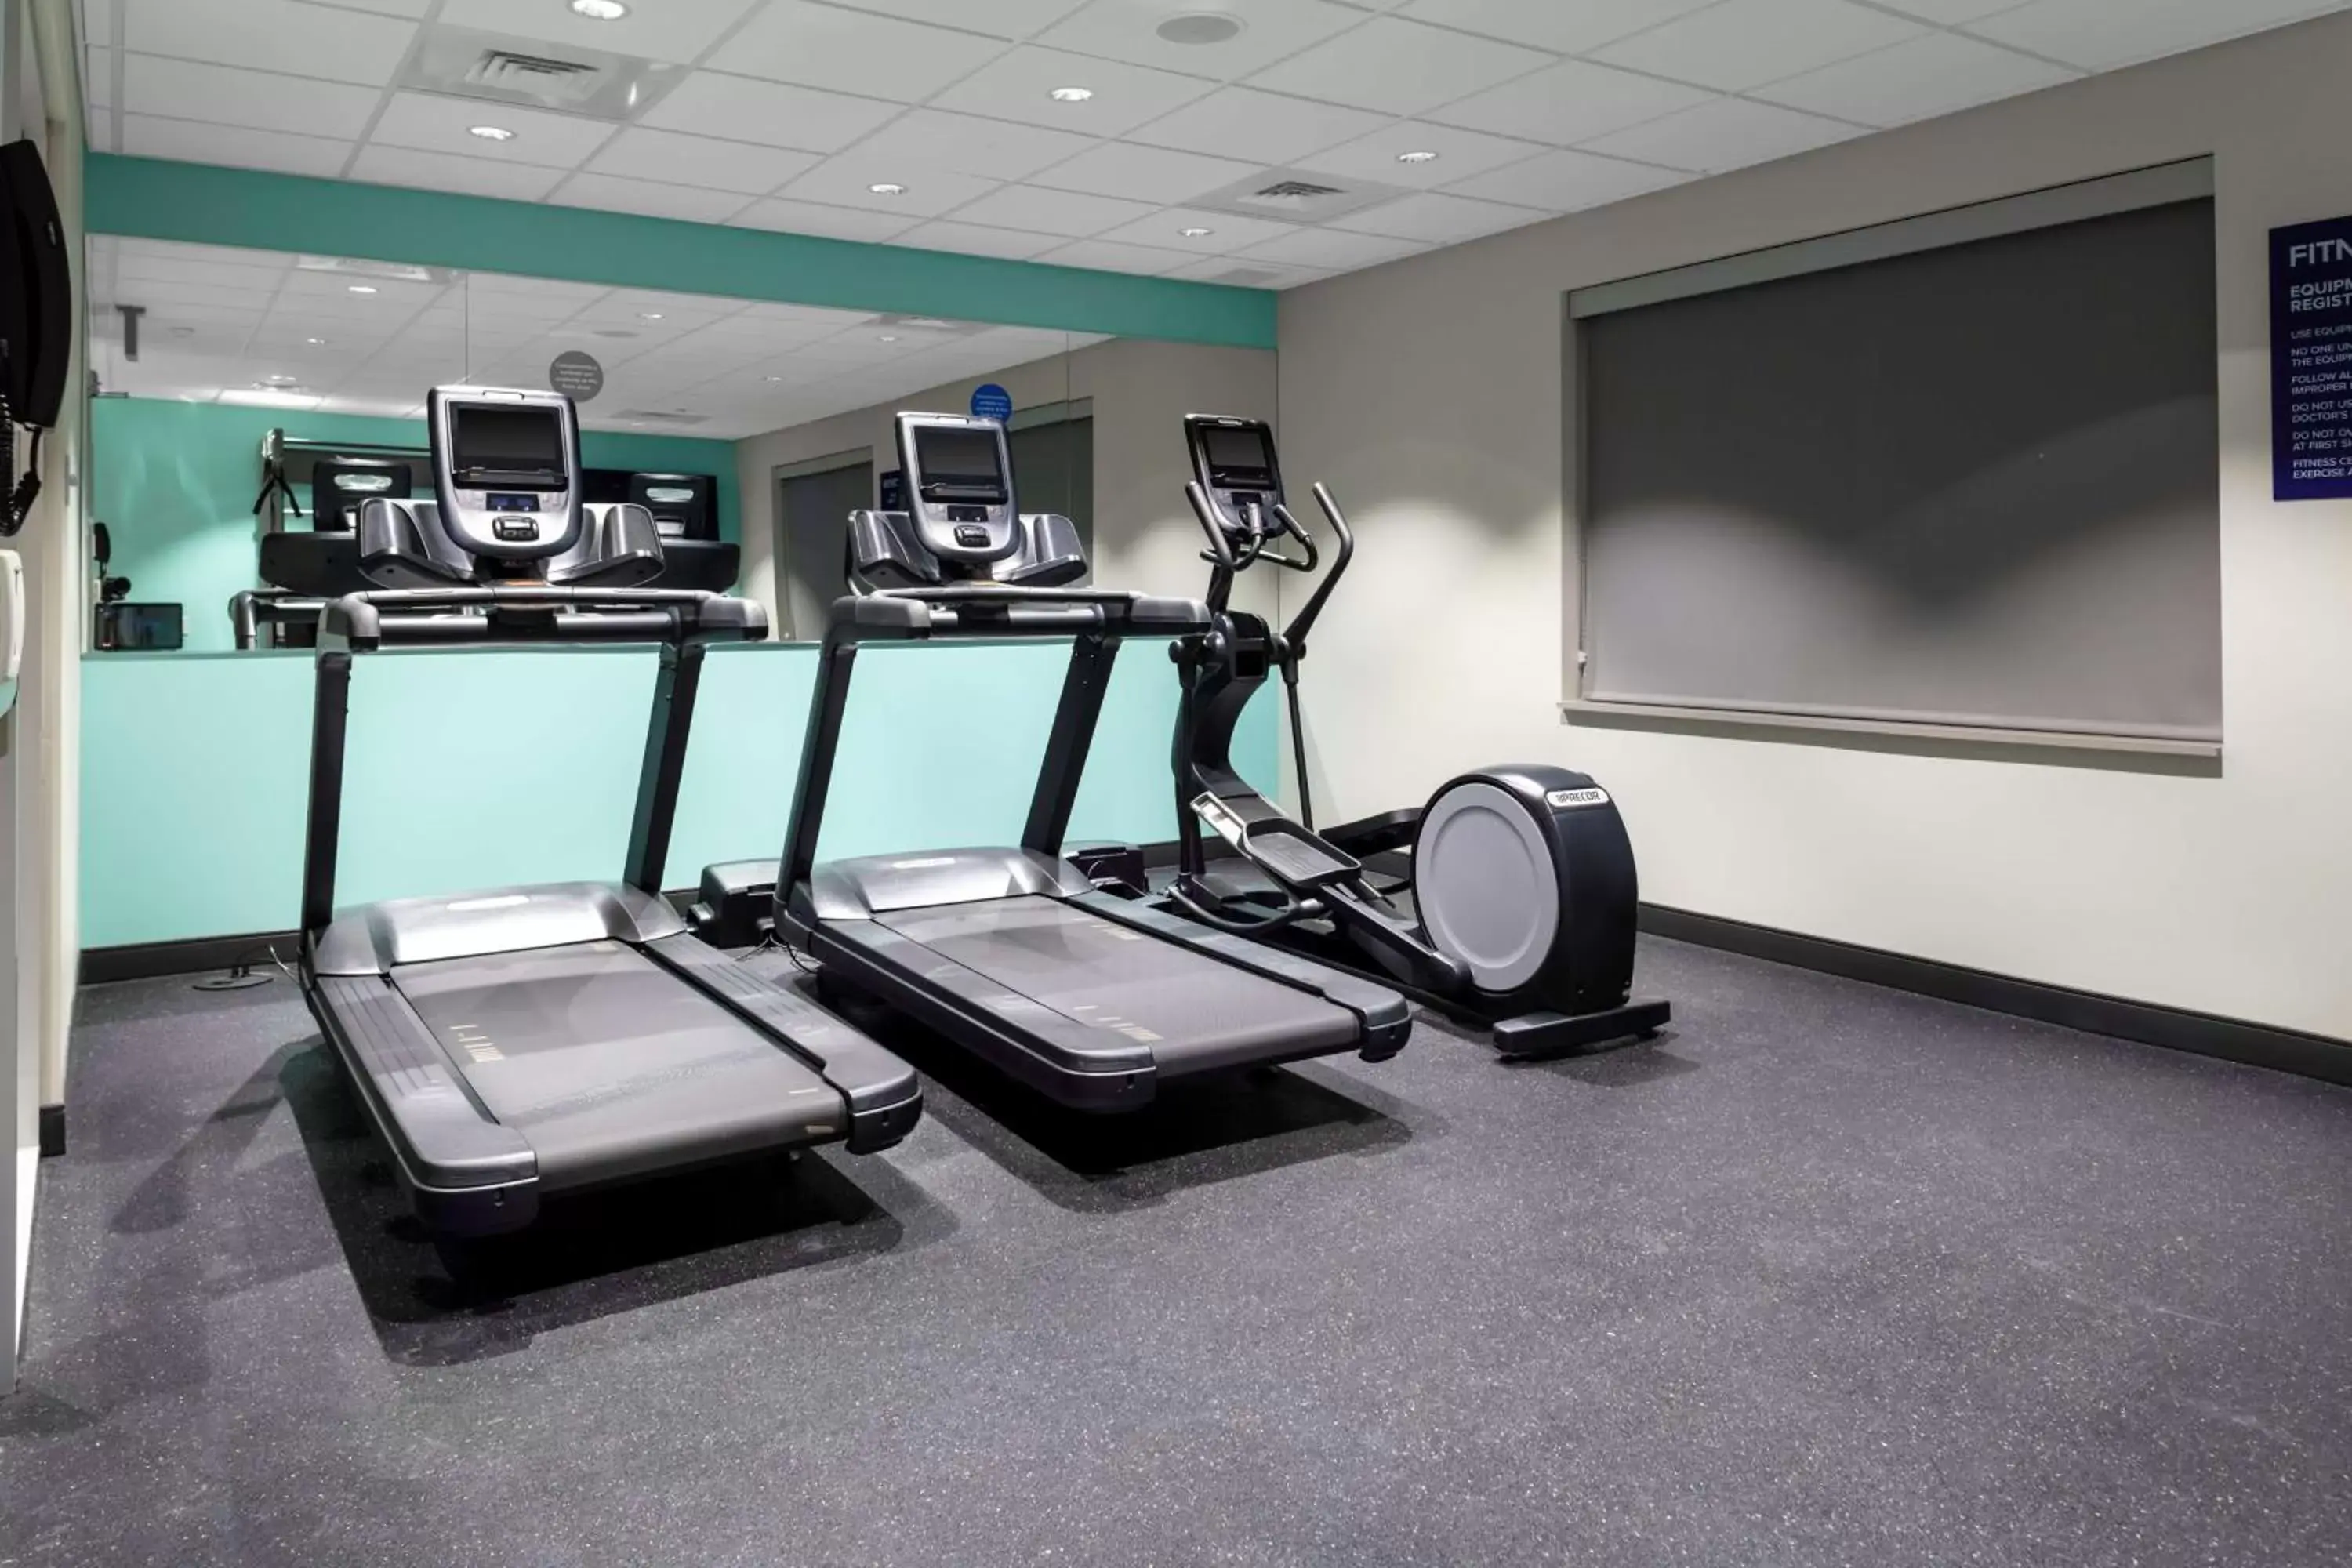 Fitness centre/facilities, Fitness Center/Facilities in Tru By Hilton Lynchburg, Va